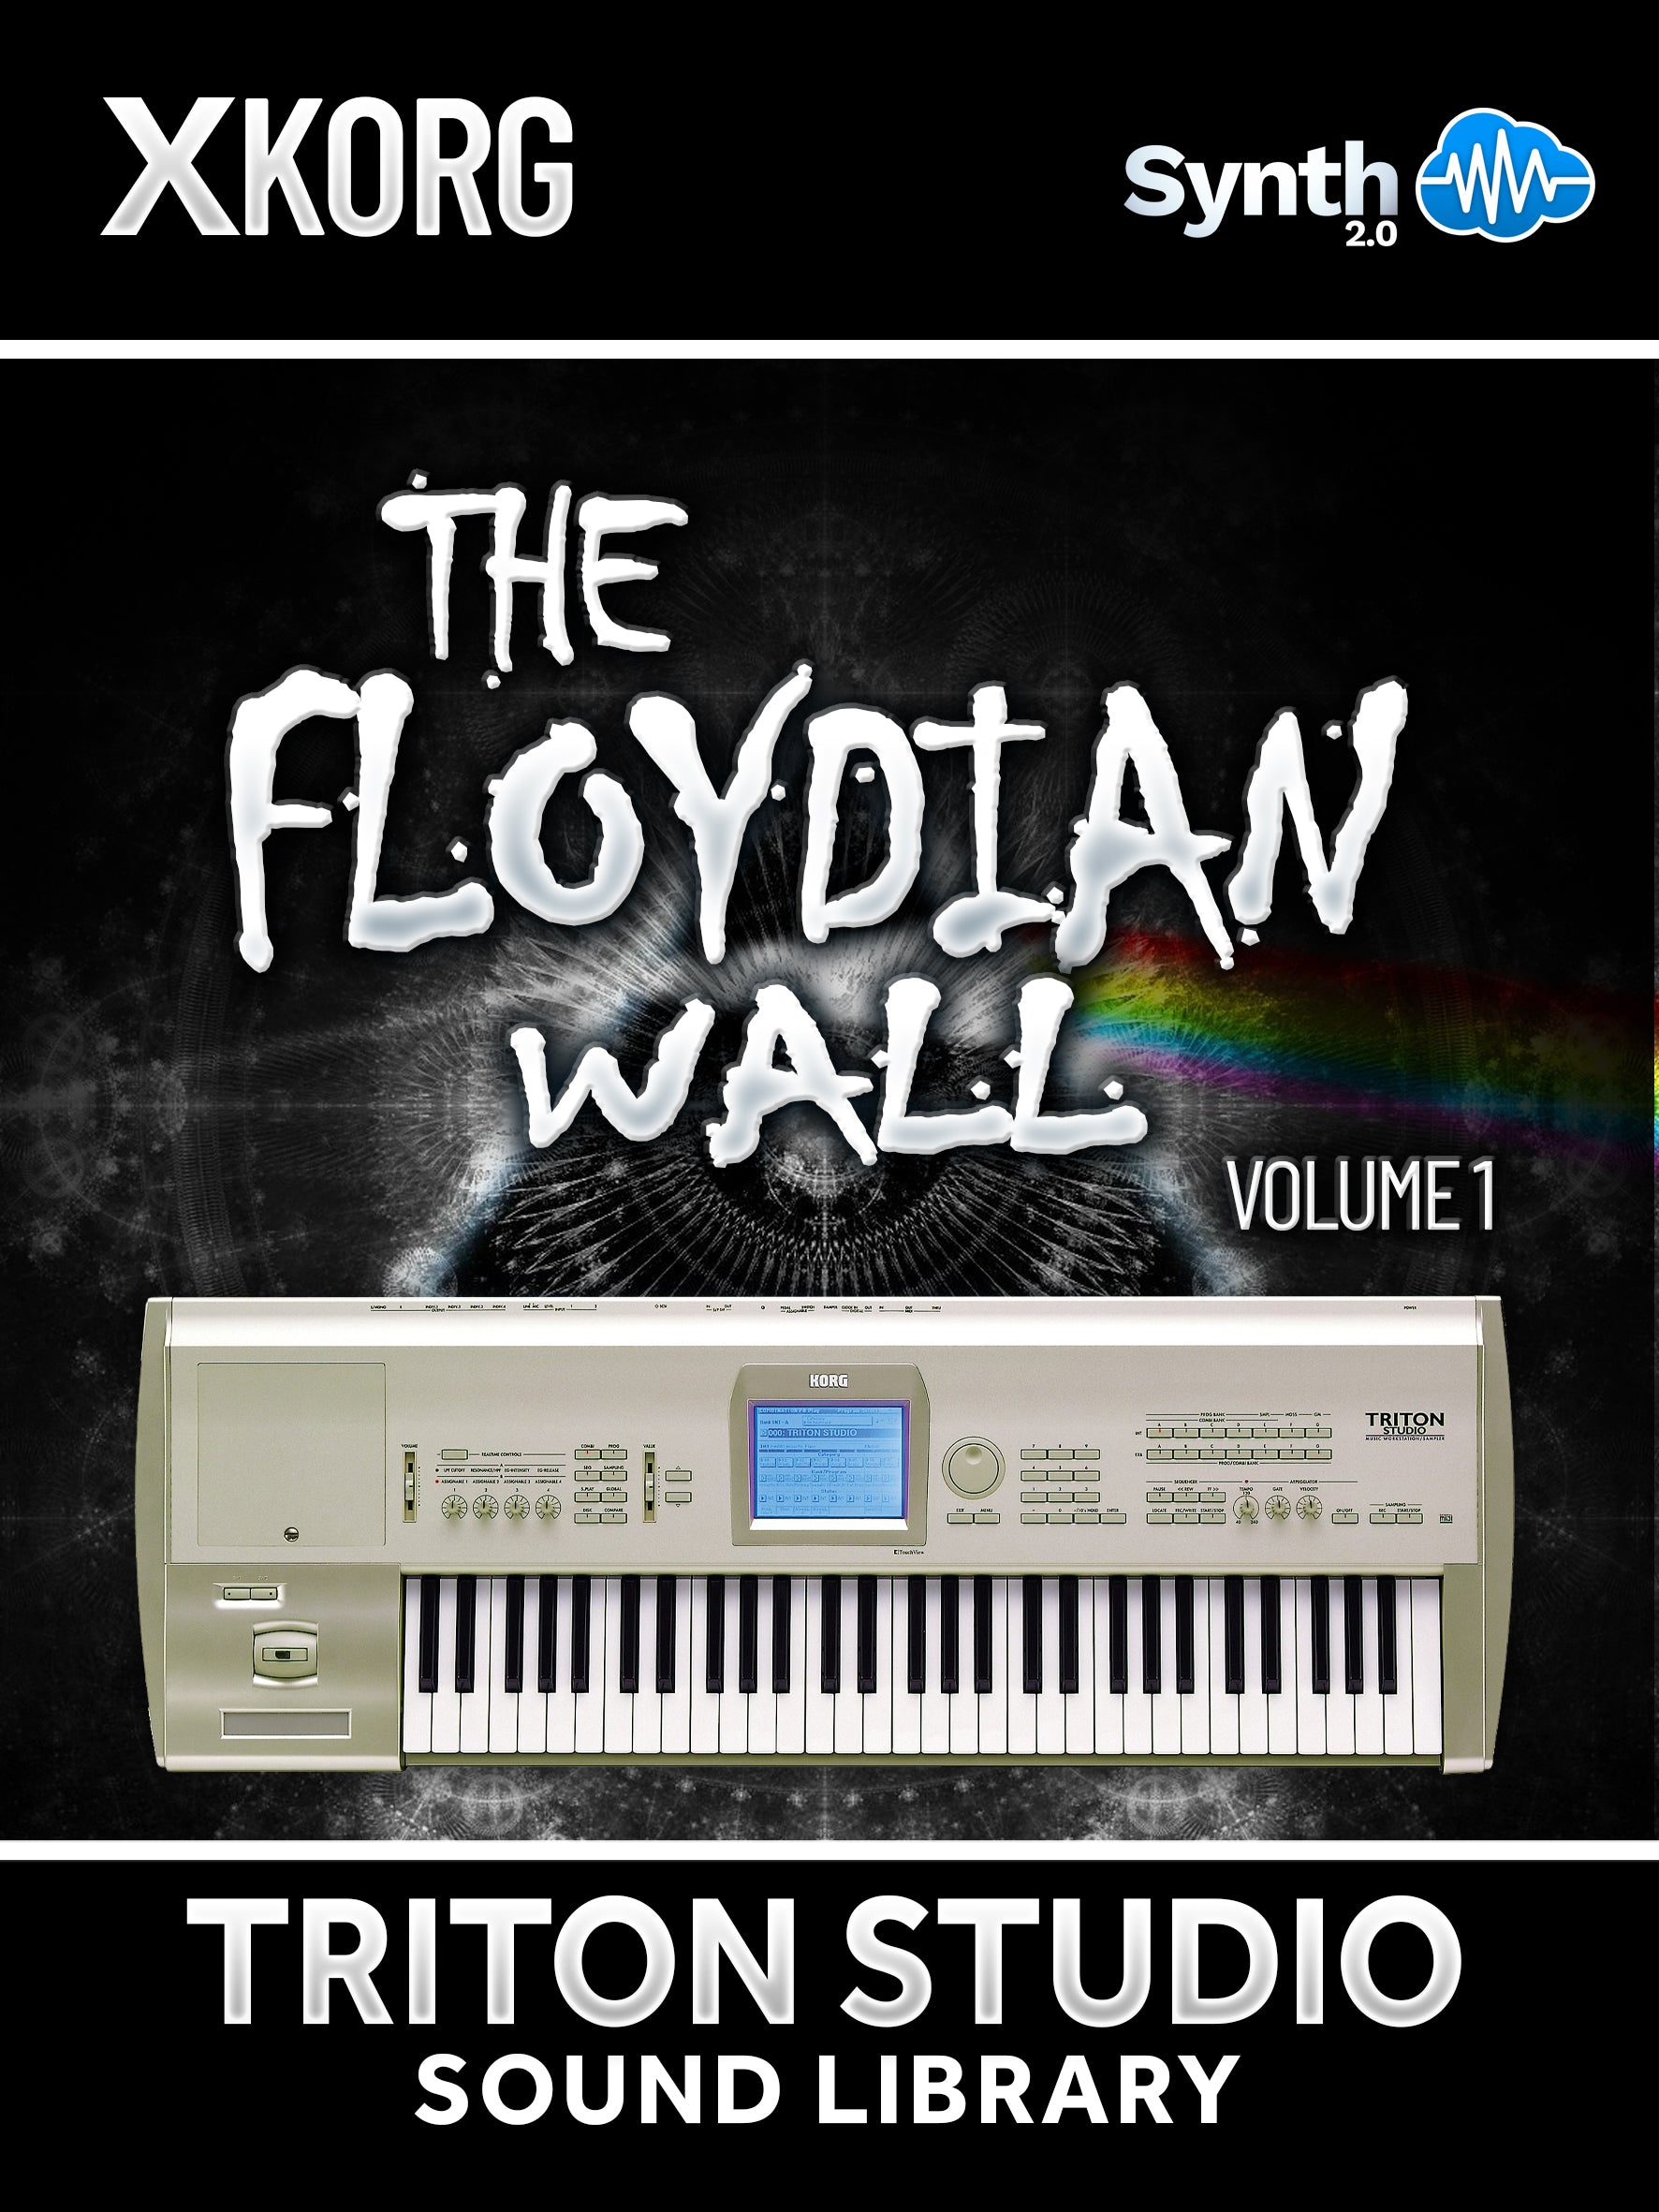 SSX101 - The Floydian Wall V.1 - Korg Triton STUDIO ( 32 presets )